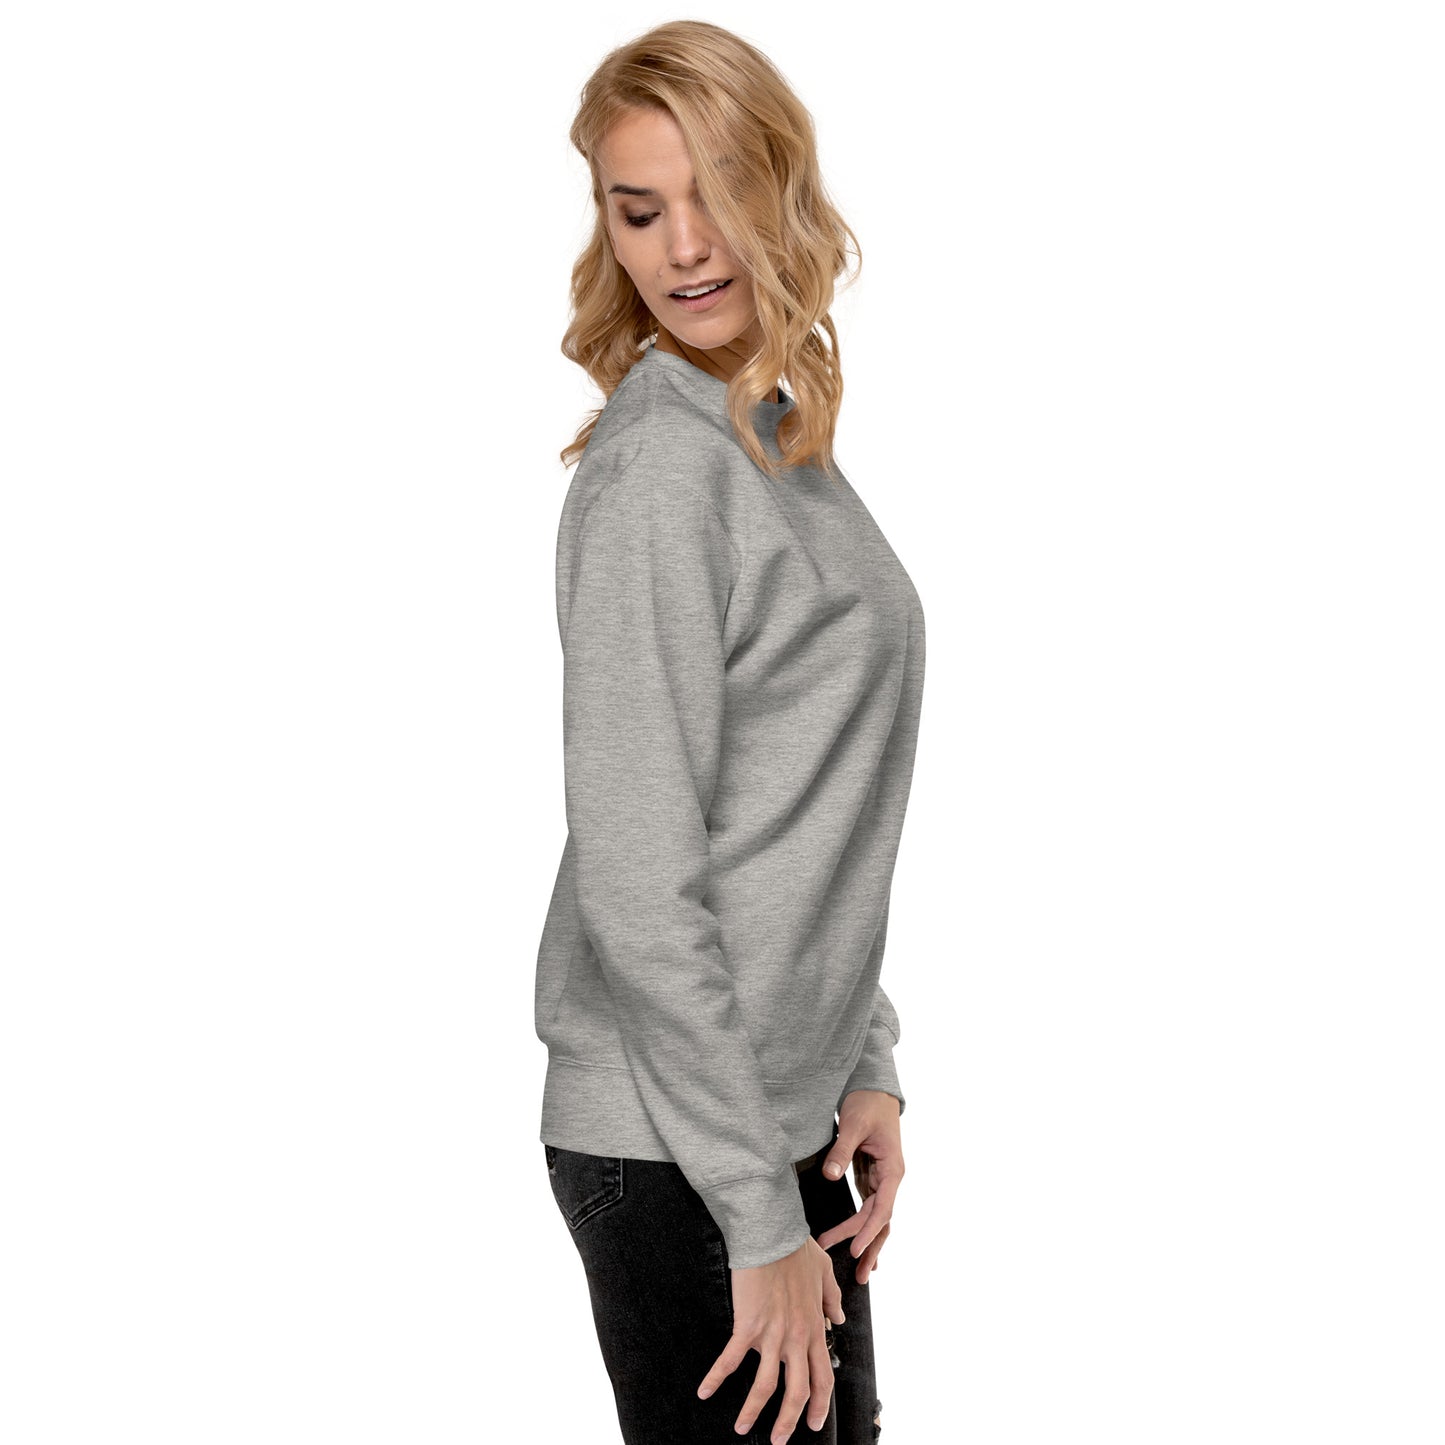 Next Level Unisex Premium Sweatshirt